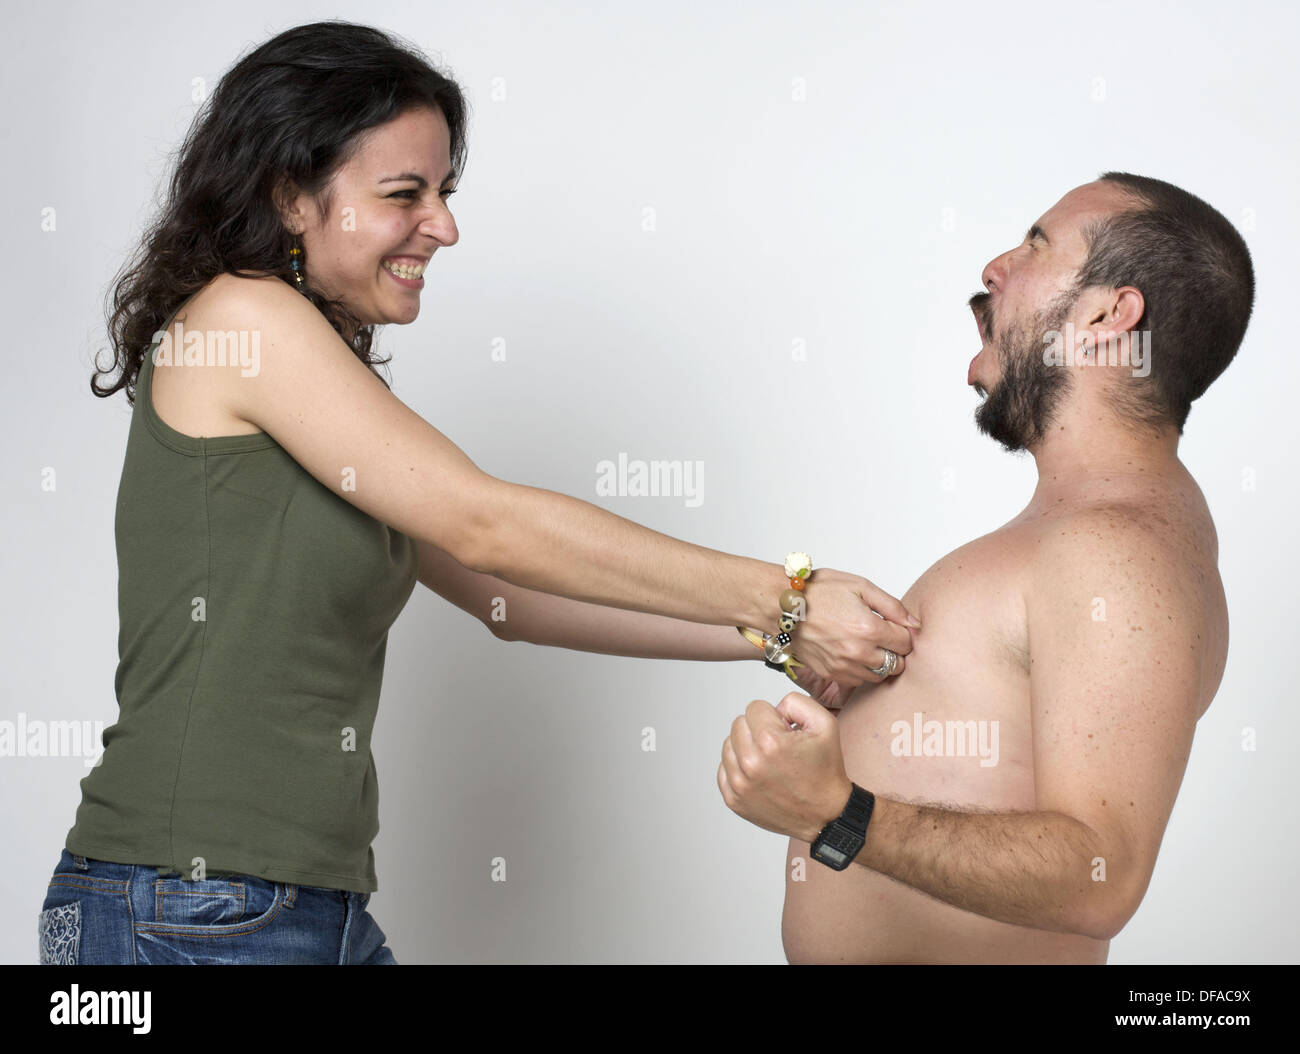 Pinching her nipples